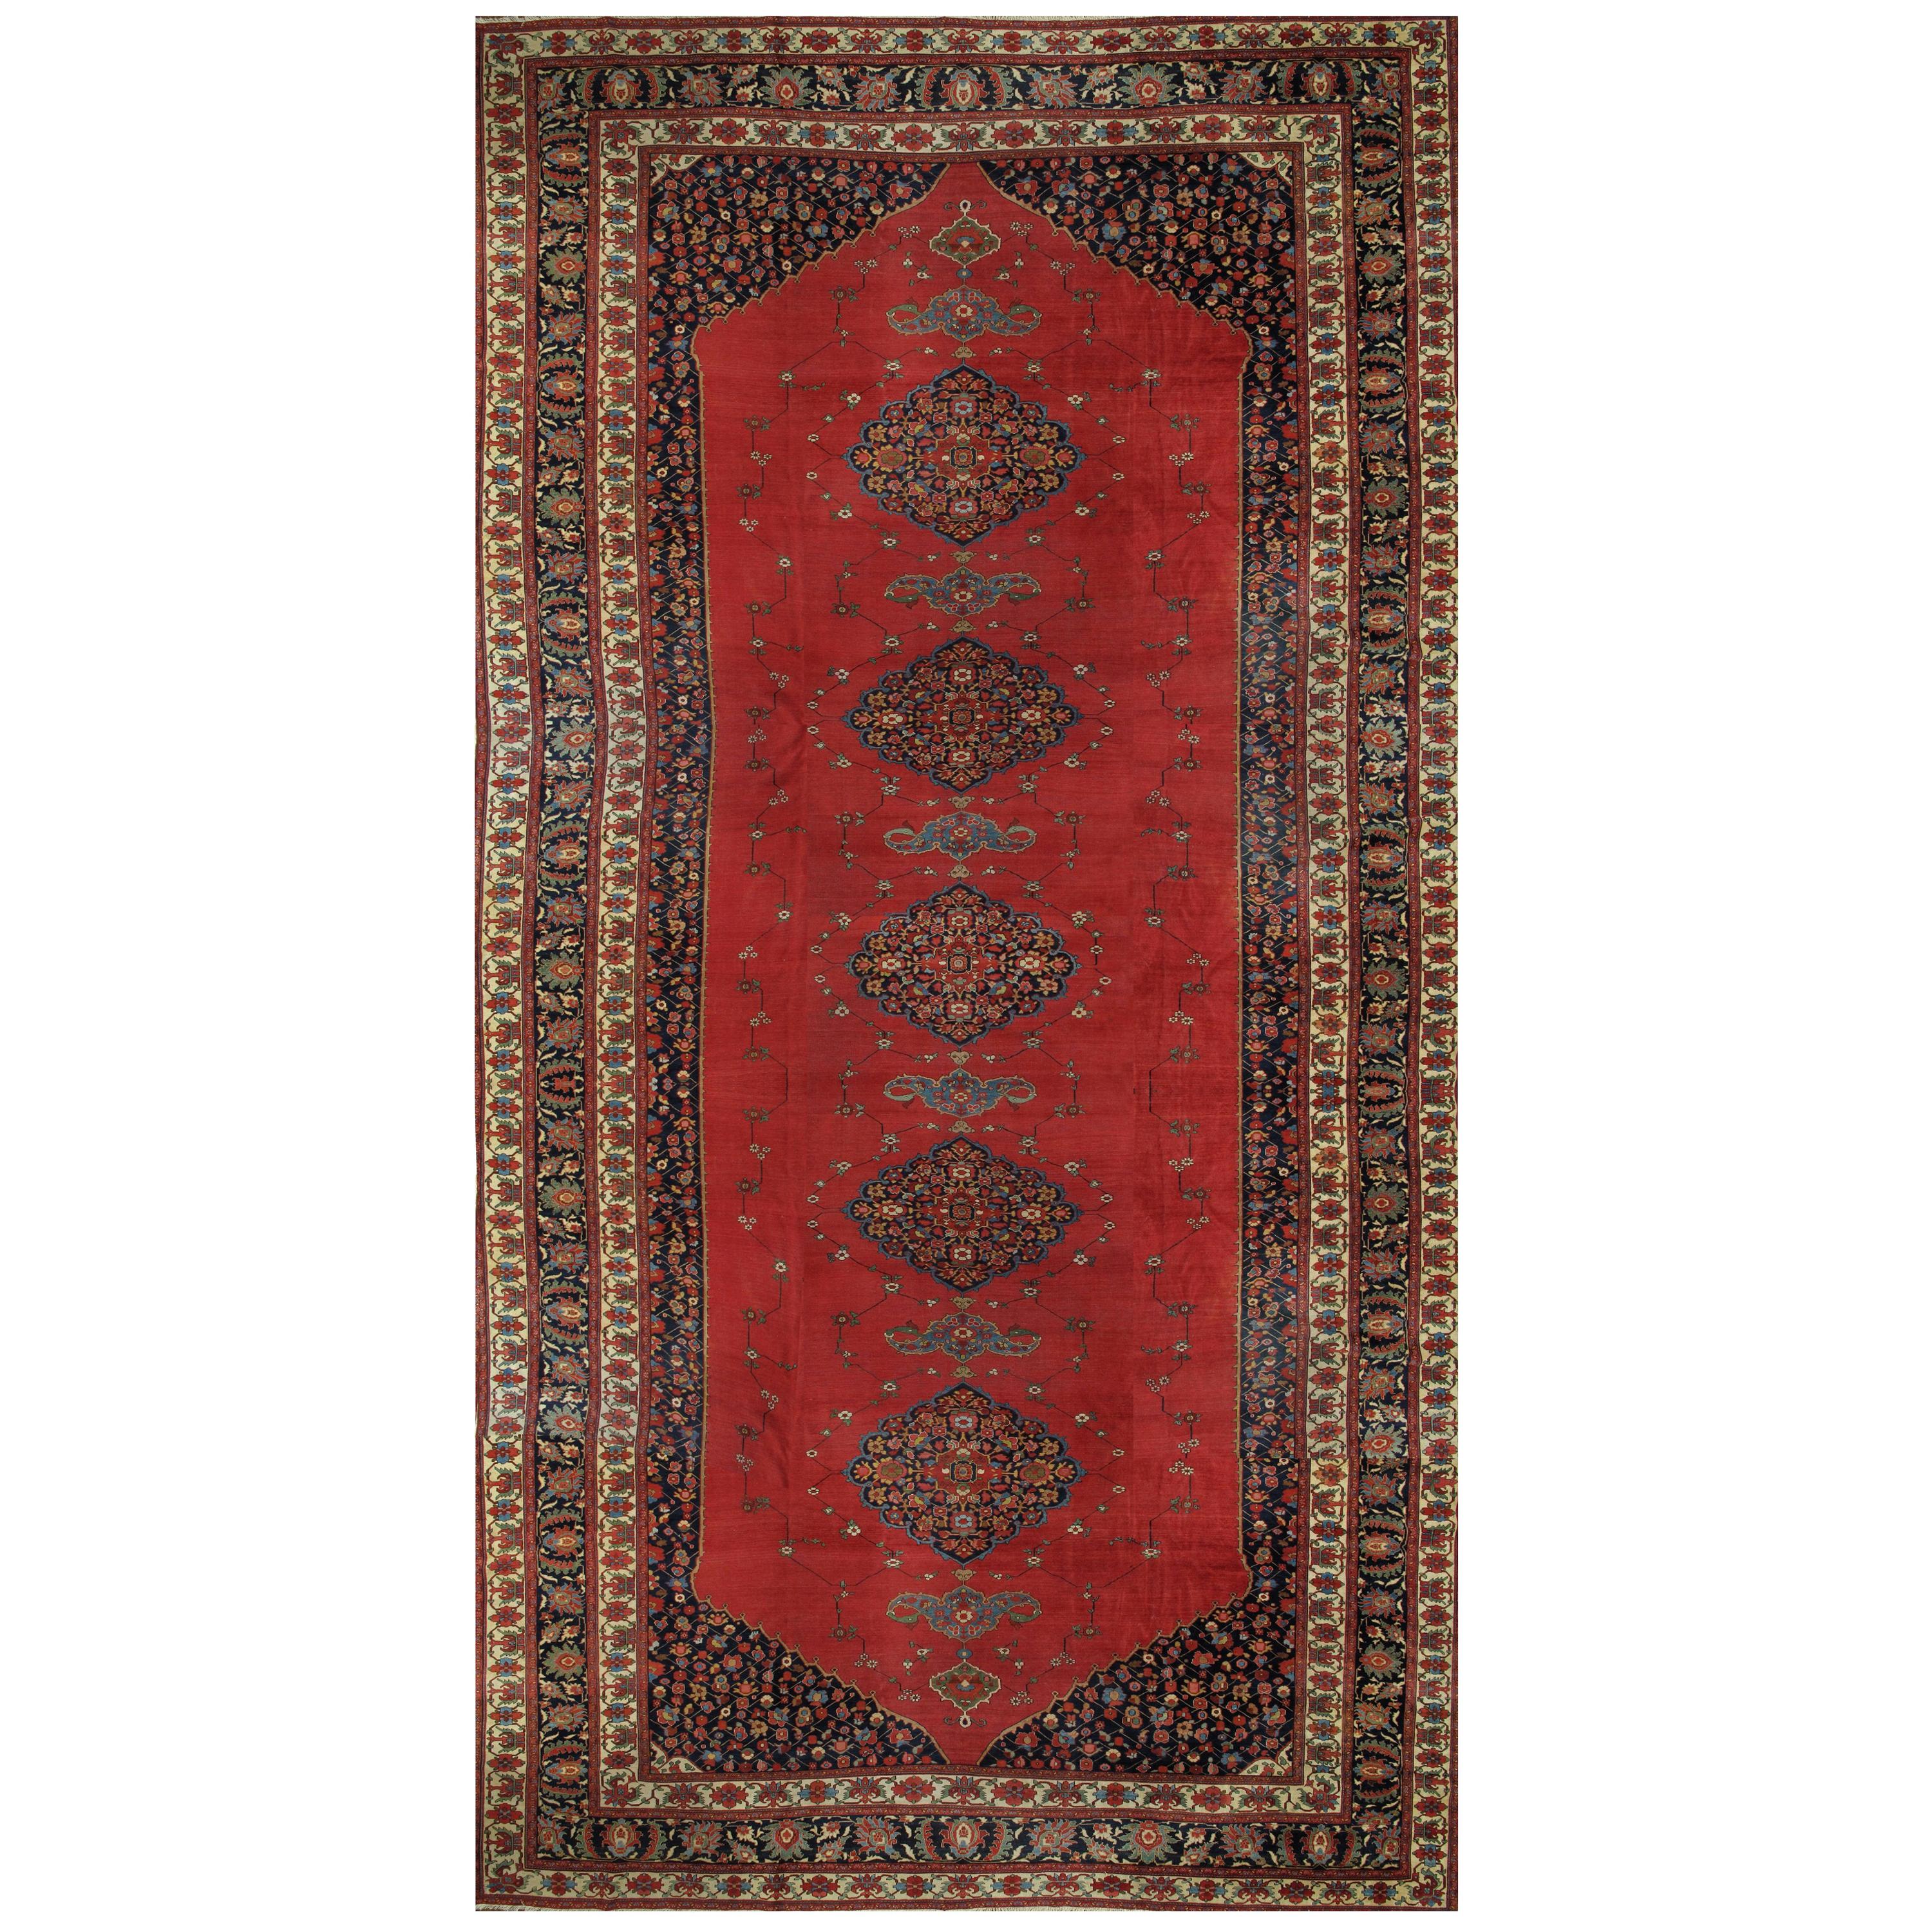 Antique Farahan Sarouk Carpet, Handmade Oriental Rug, Ivory, Navy, Red